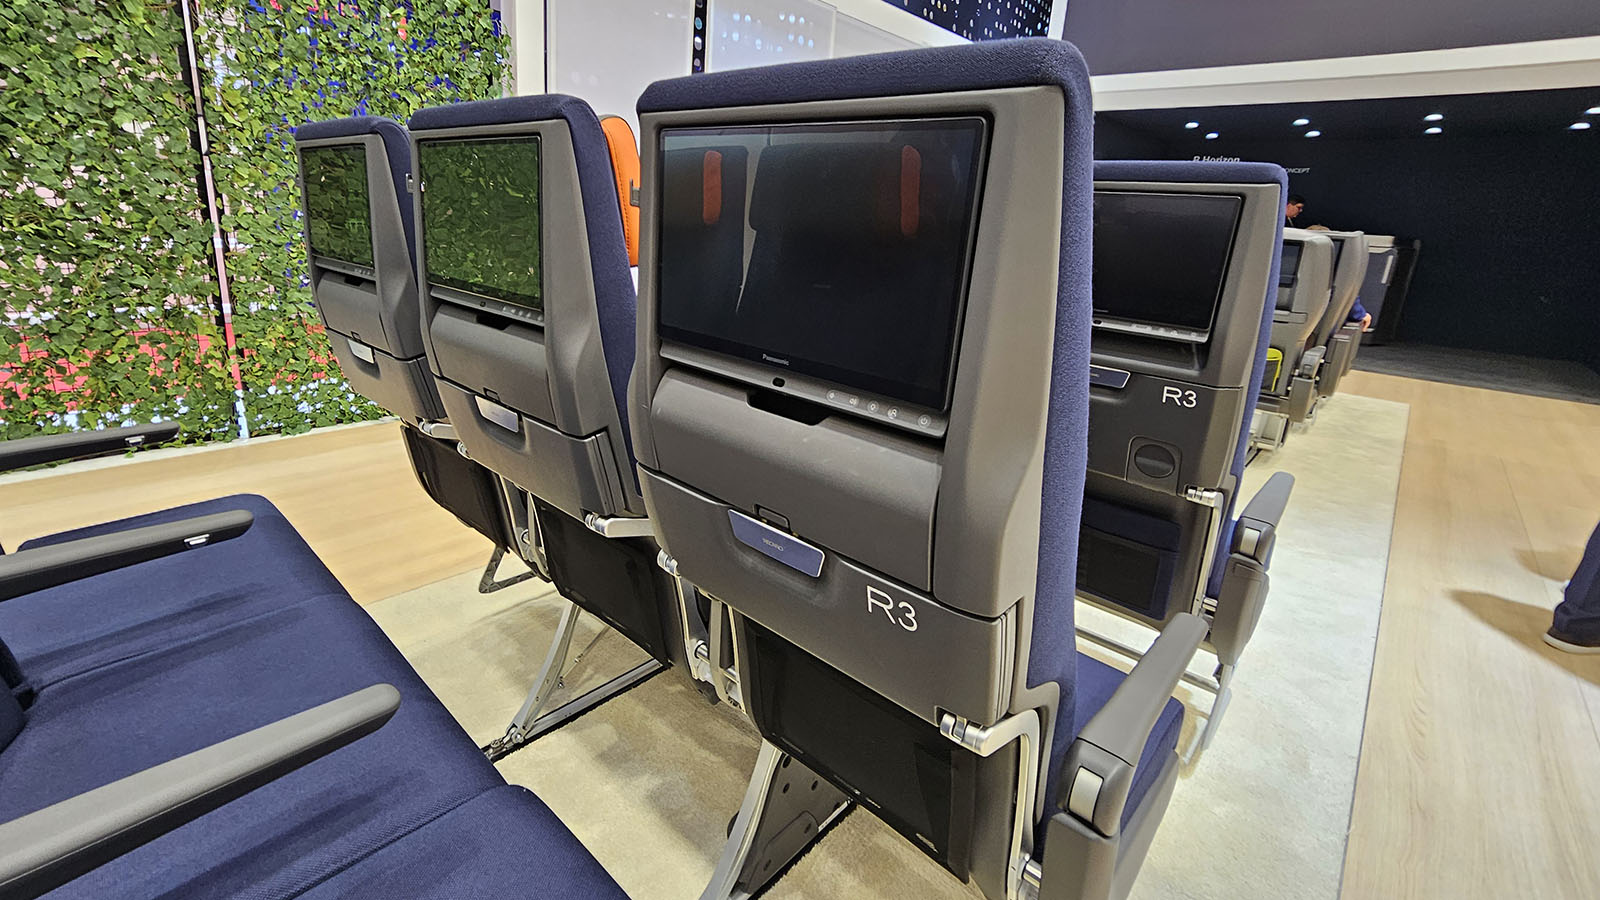 TV monitor in Qantas' Project Sunrise Economy seat